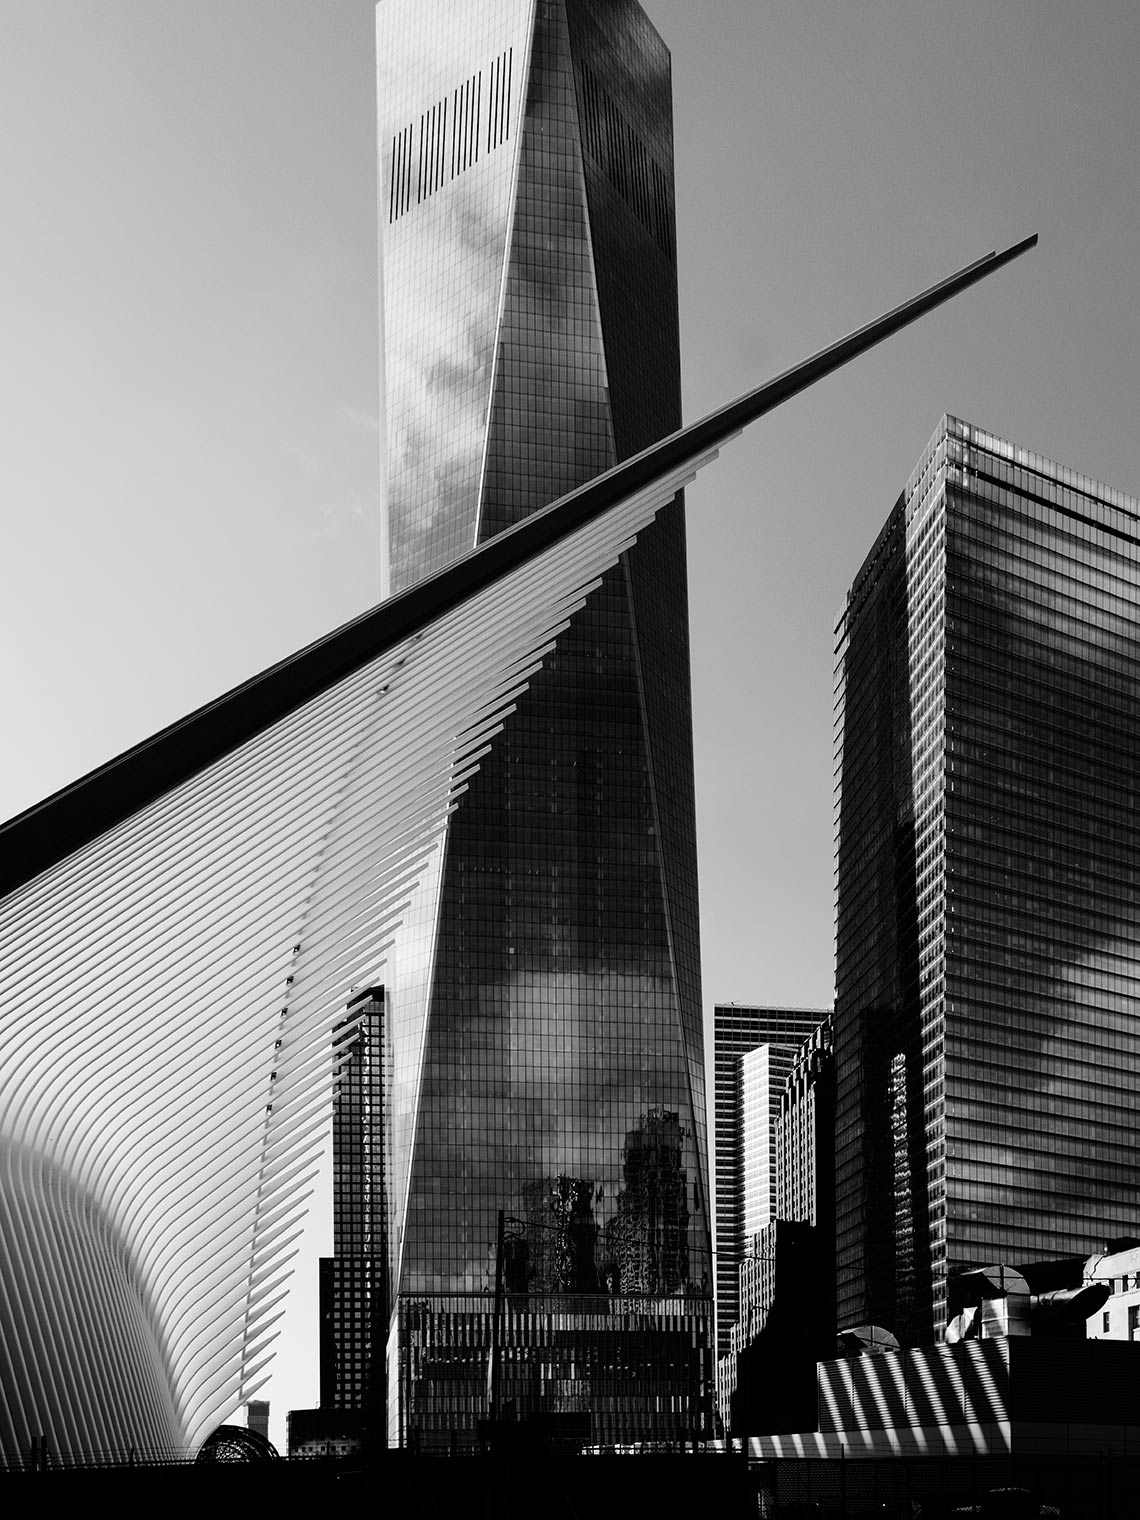 WTC Transportation Hug designed by Santiago Calatrava